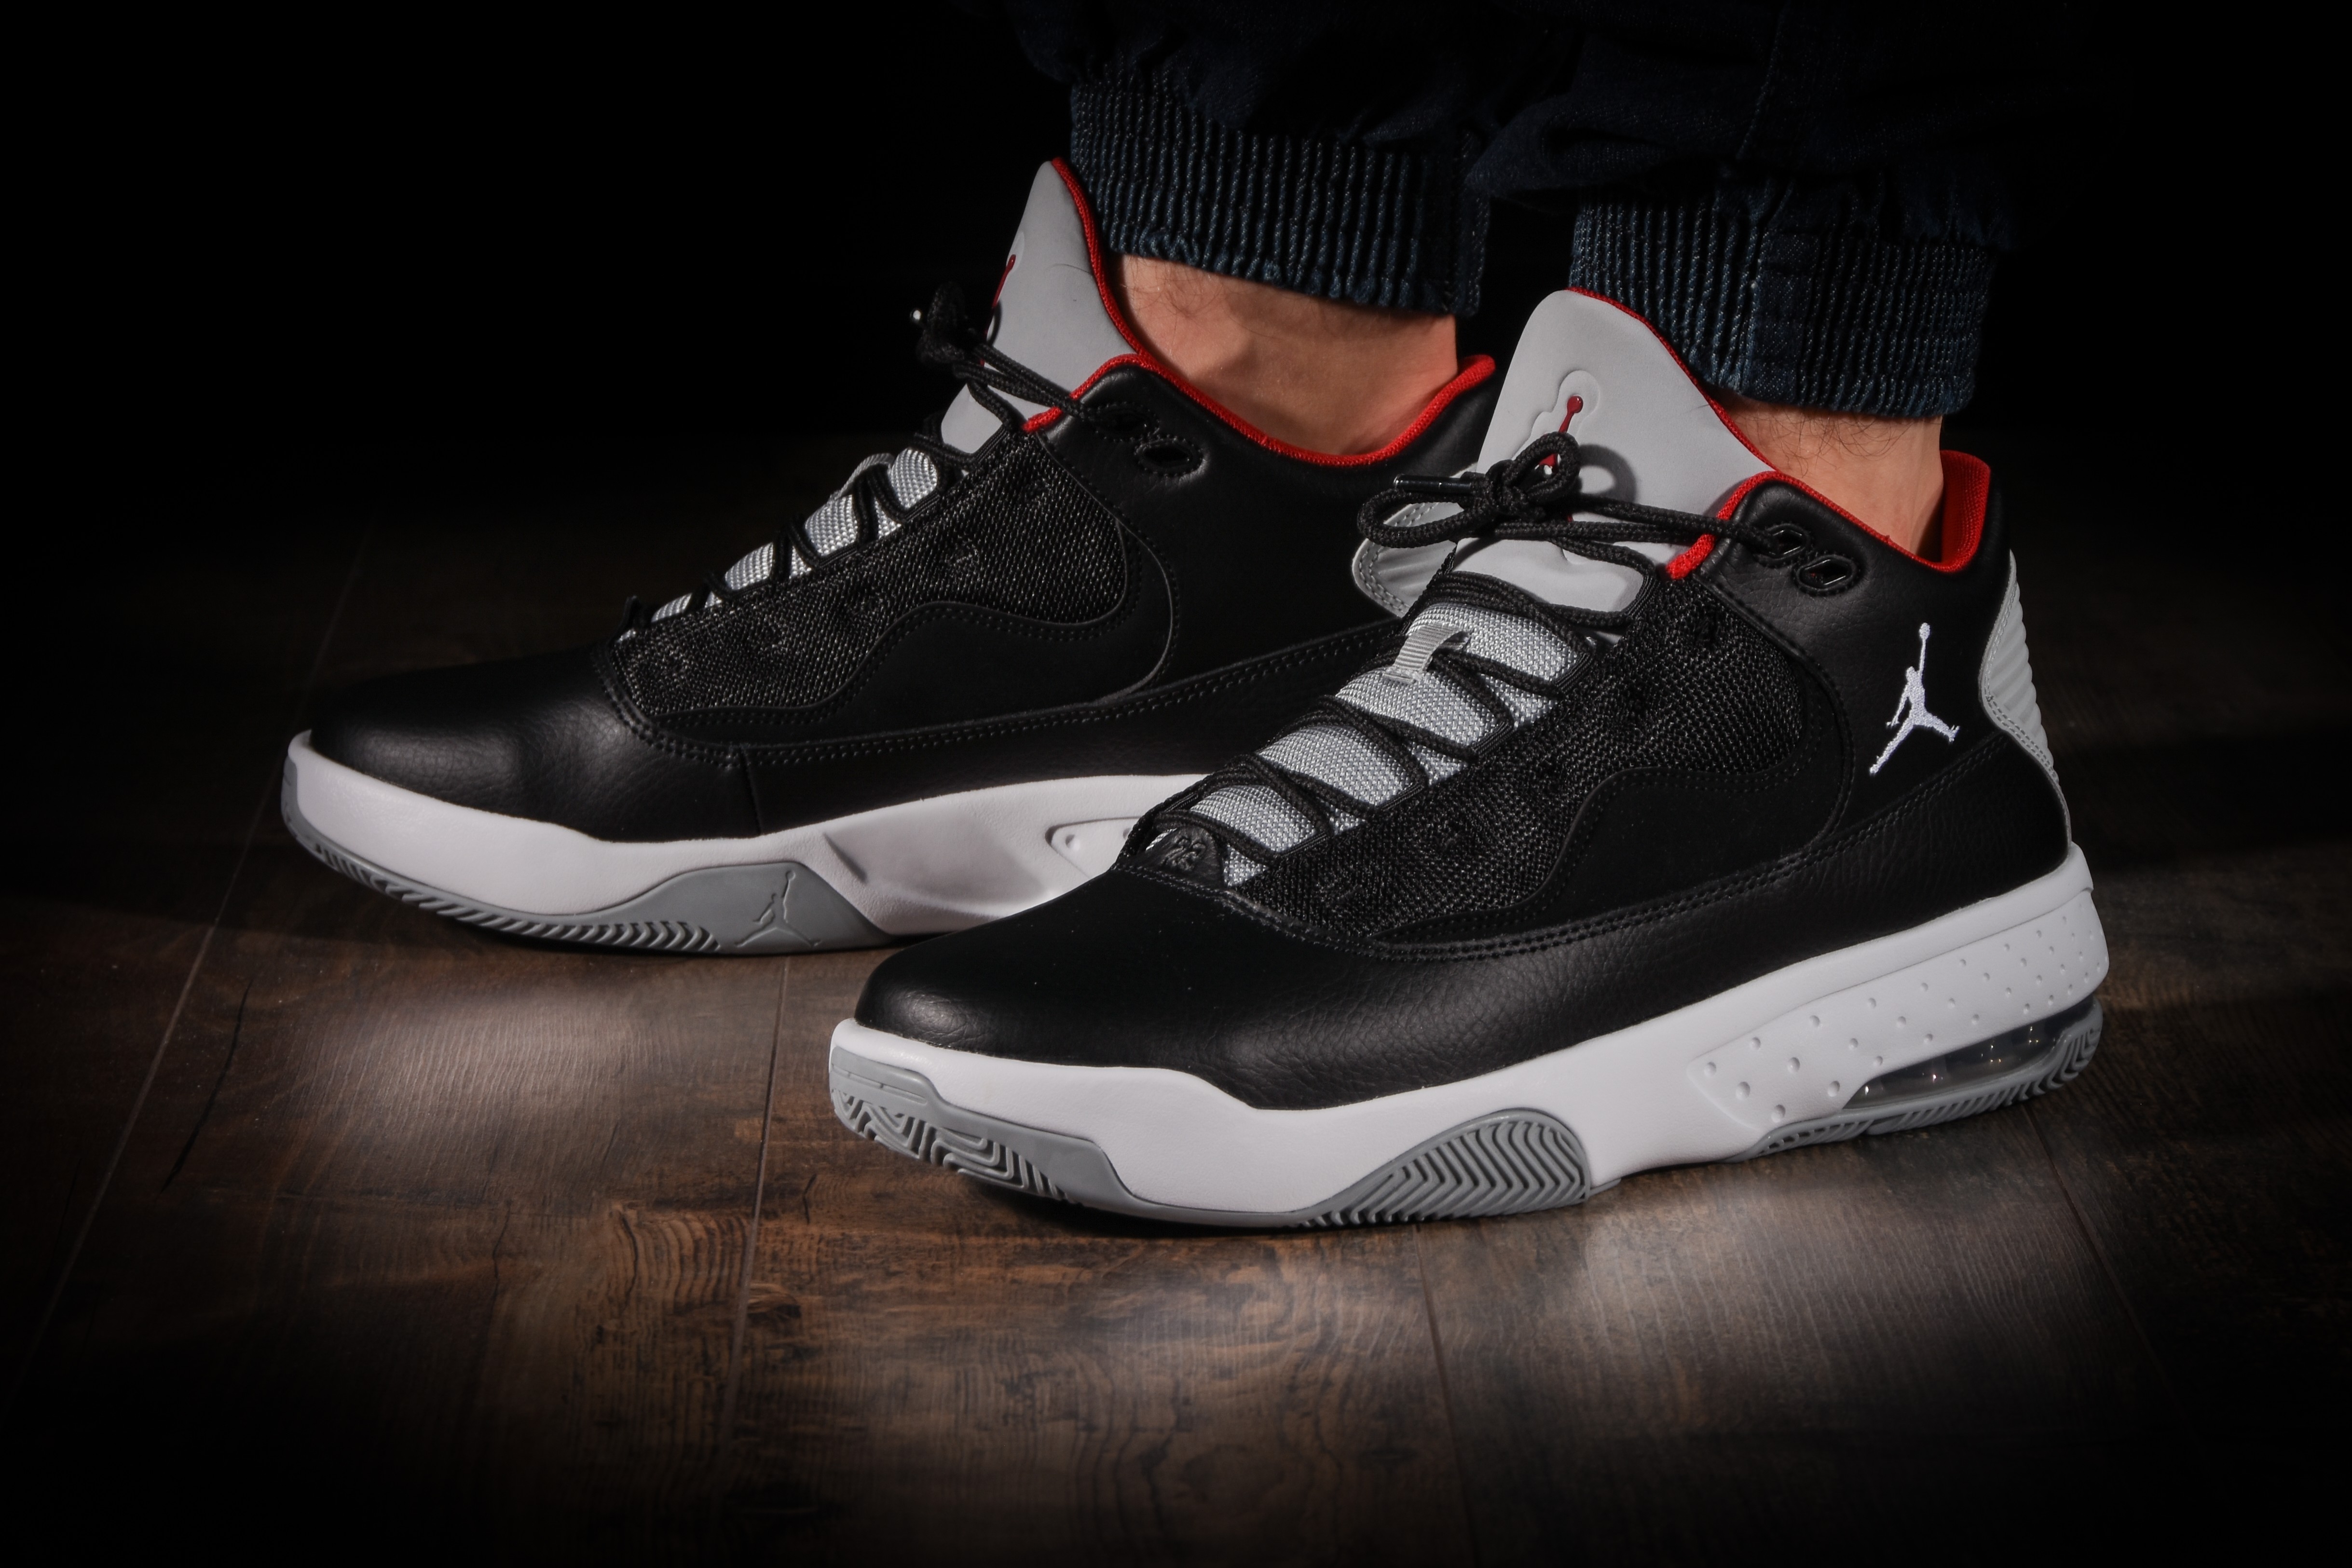 jordan max aura 2 basketball shoes